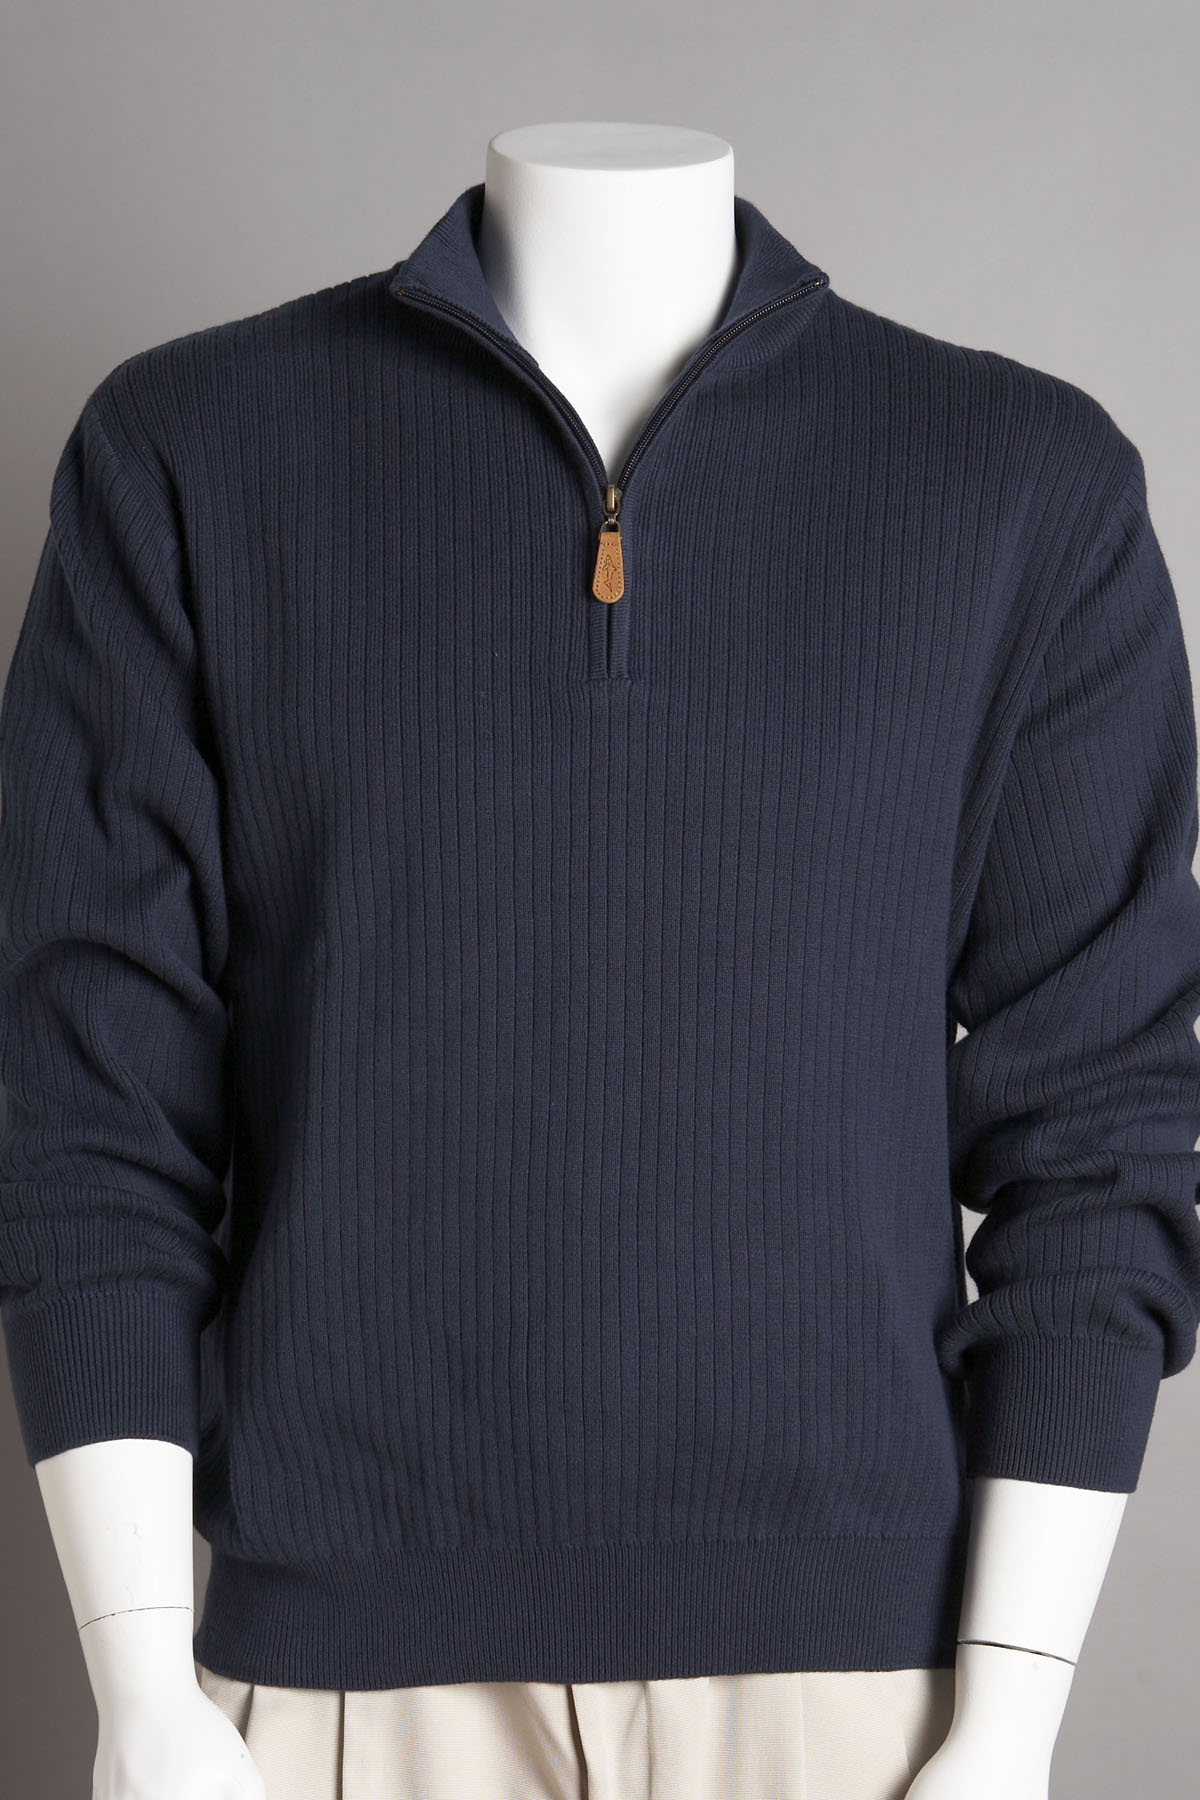 Greg Norman GNBAS103 - Drop-Needle Quarter Zip Mock Sweater